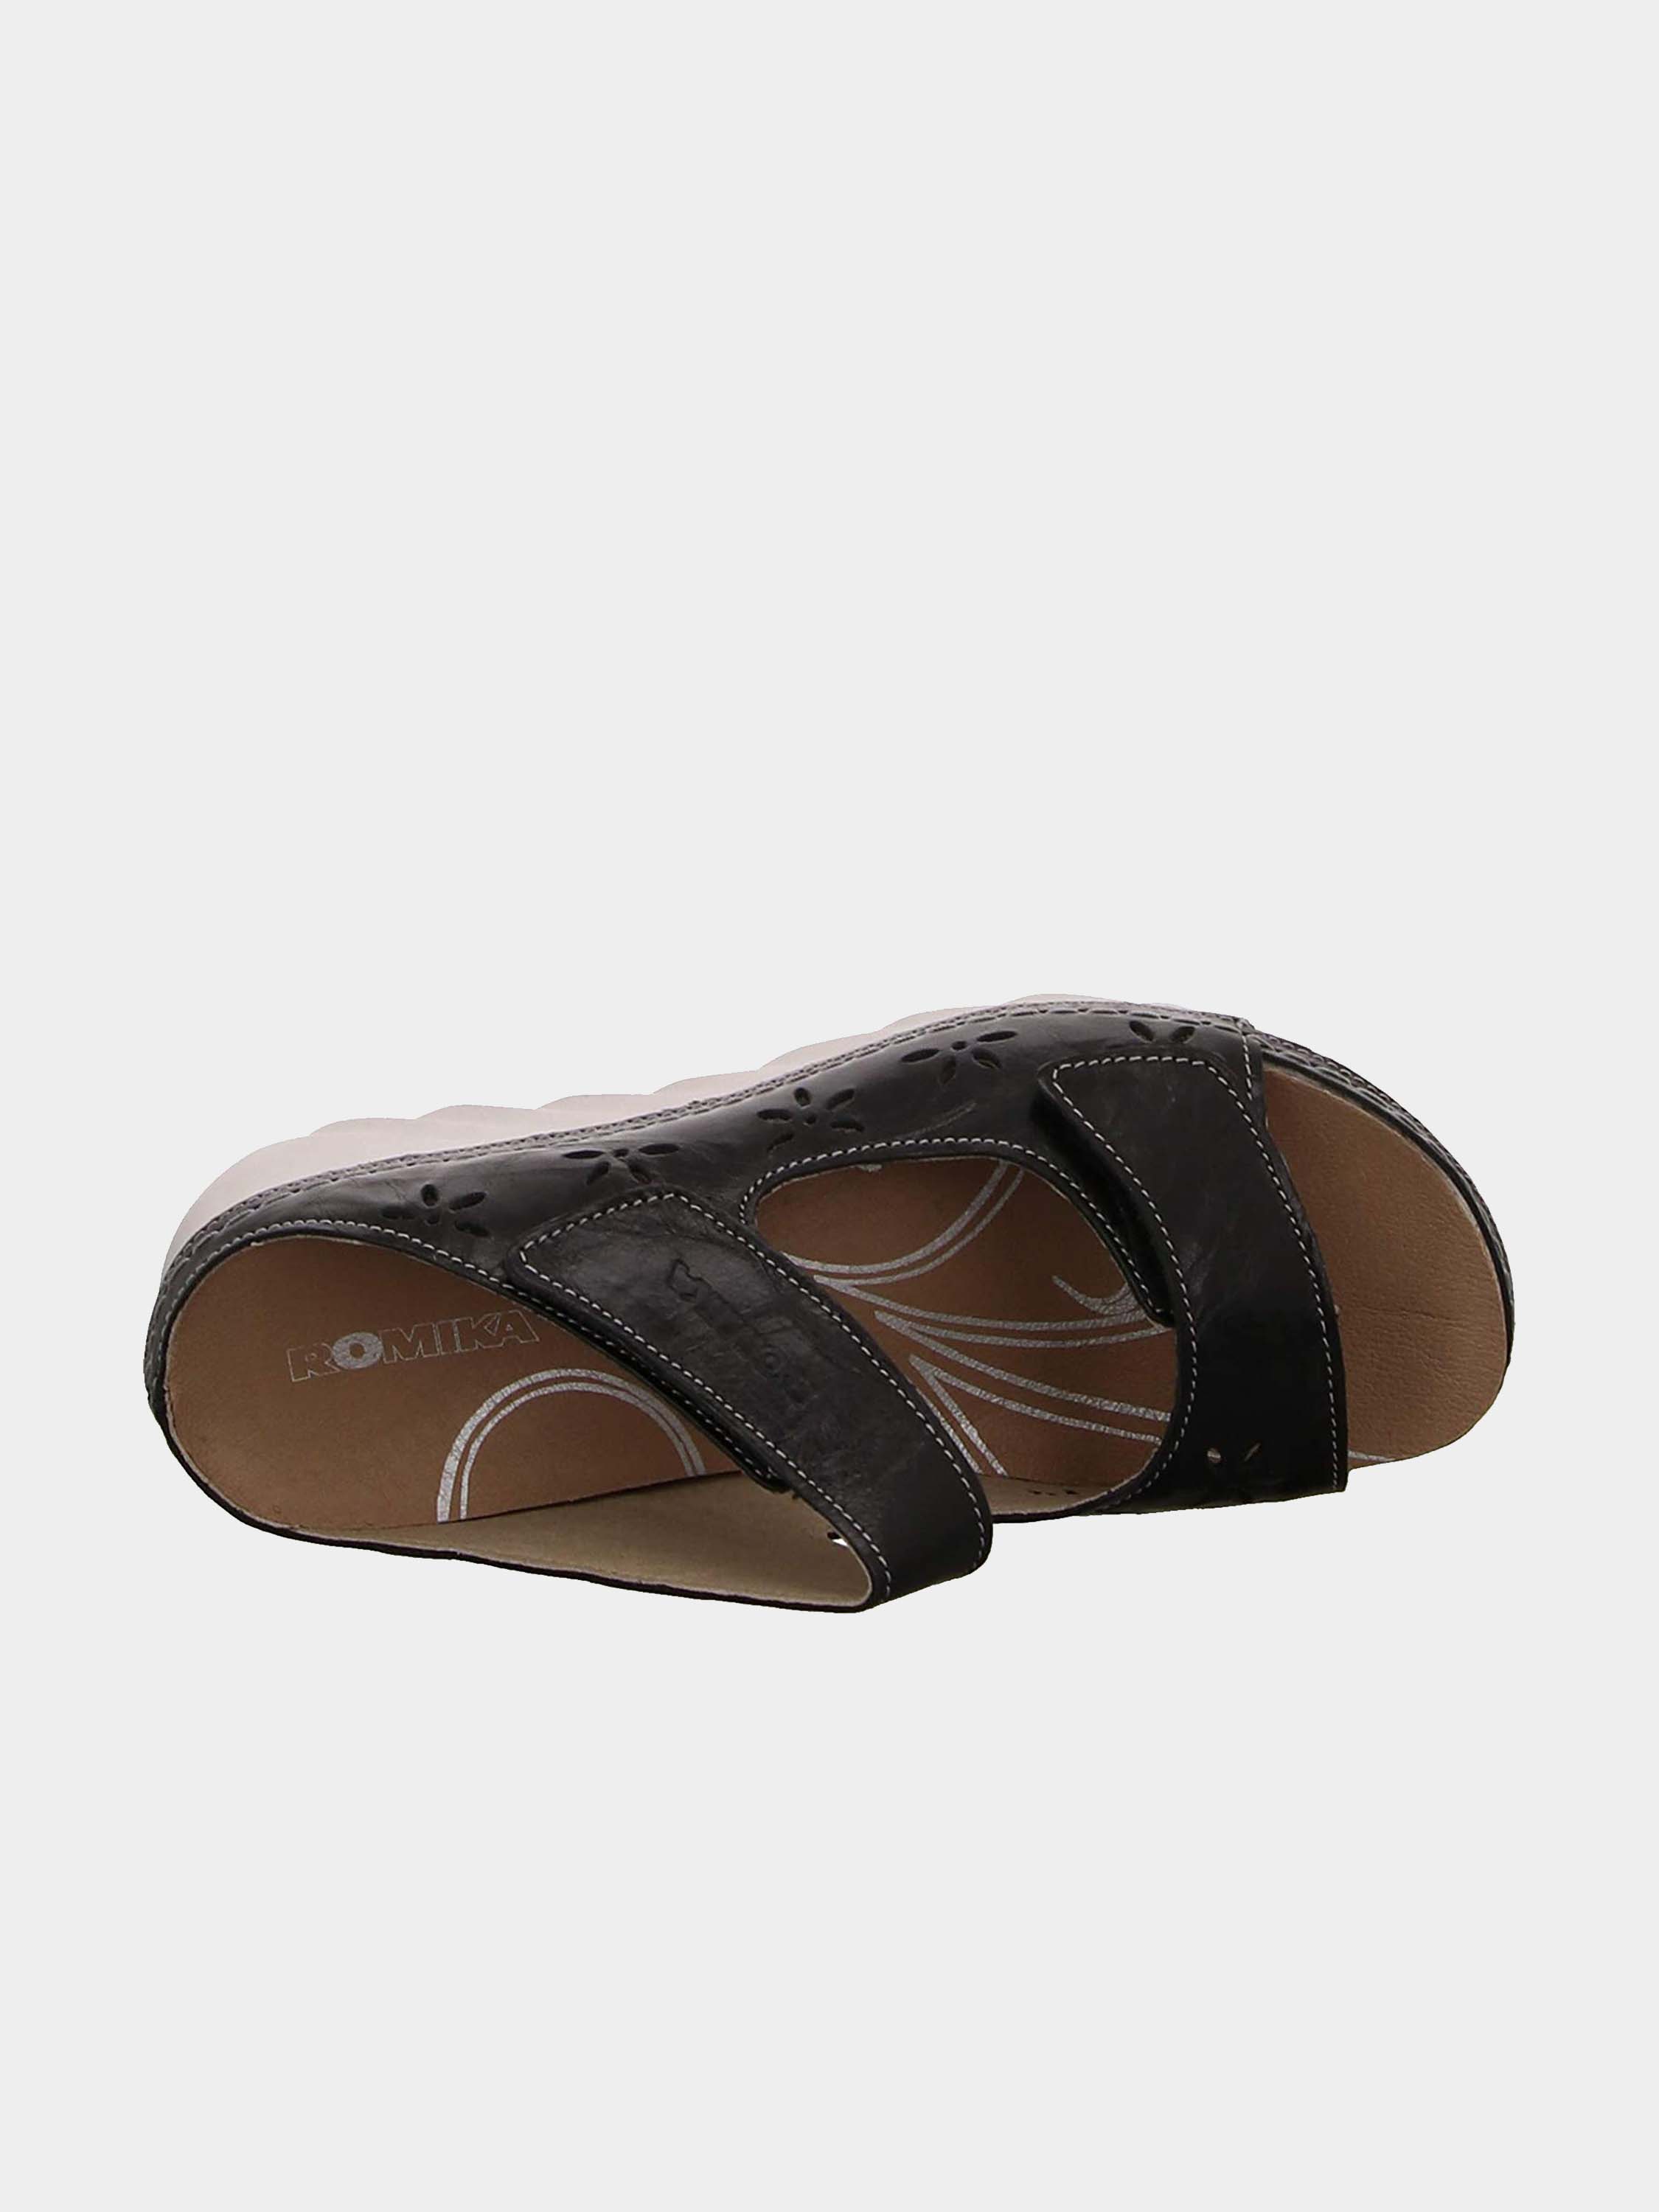 Romika Women's Salem 08 Slider Sandals #color_Black